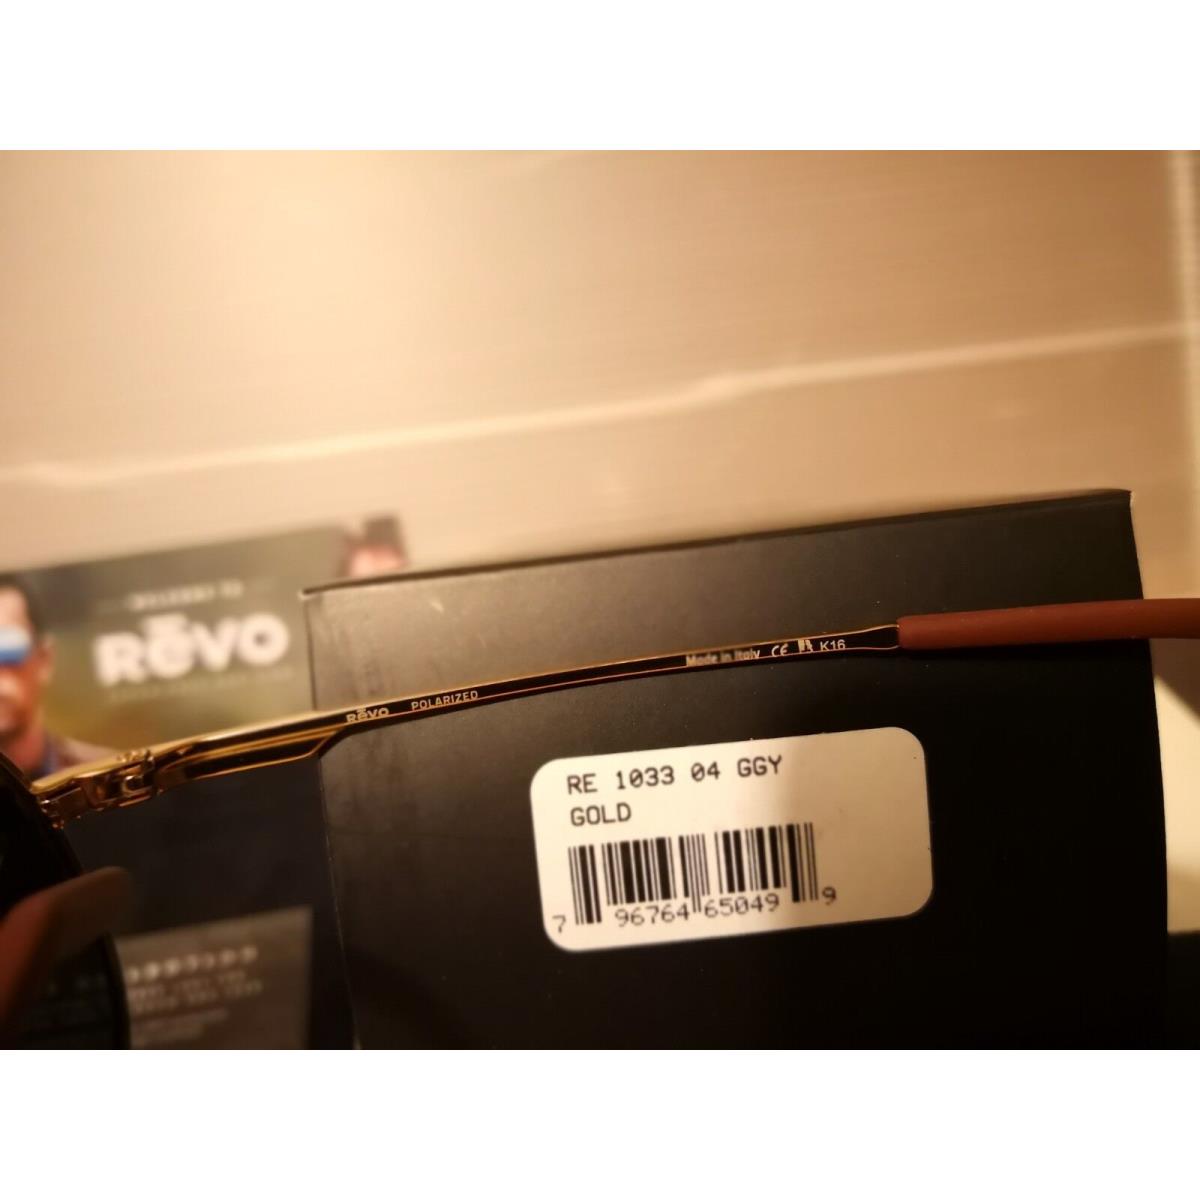 Revo sunglasses  - GOLD Frame, Crystal Graphite Polarized Lens